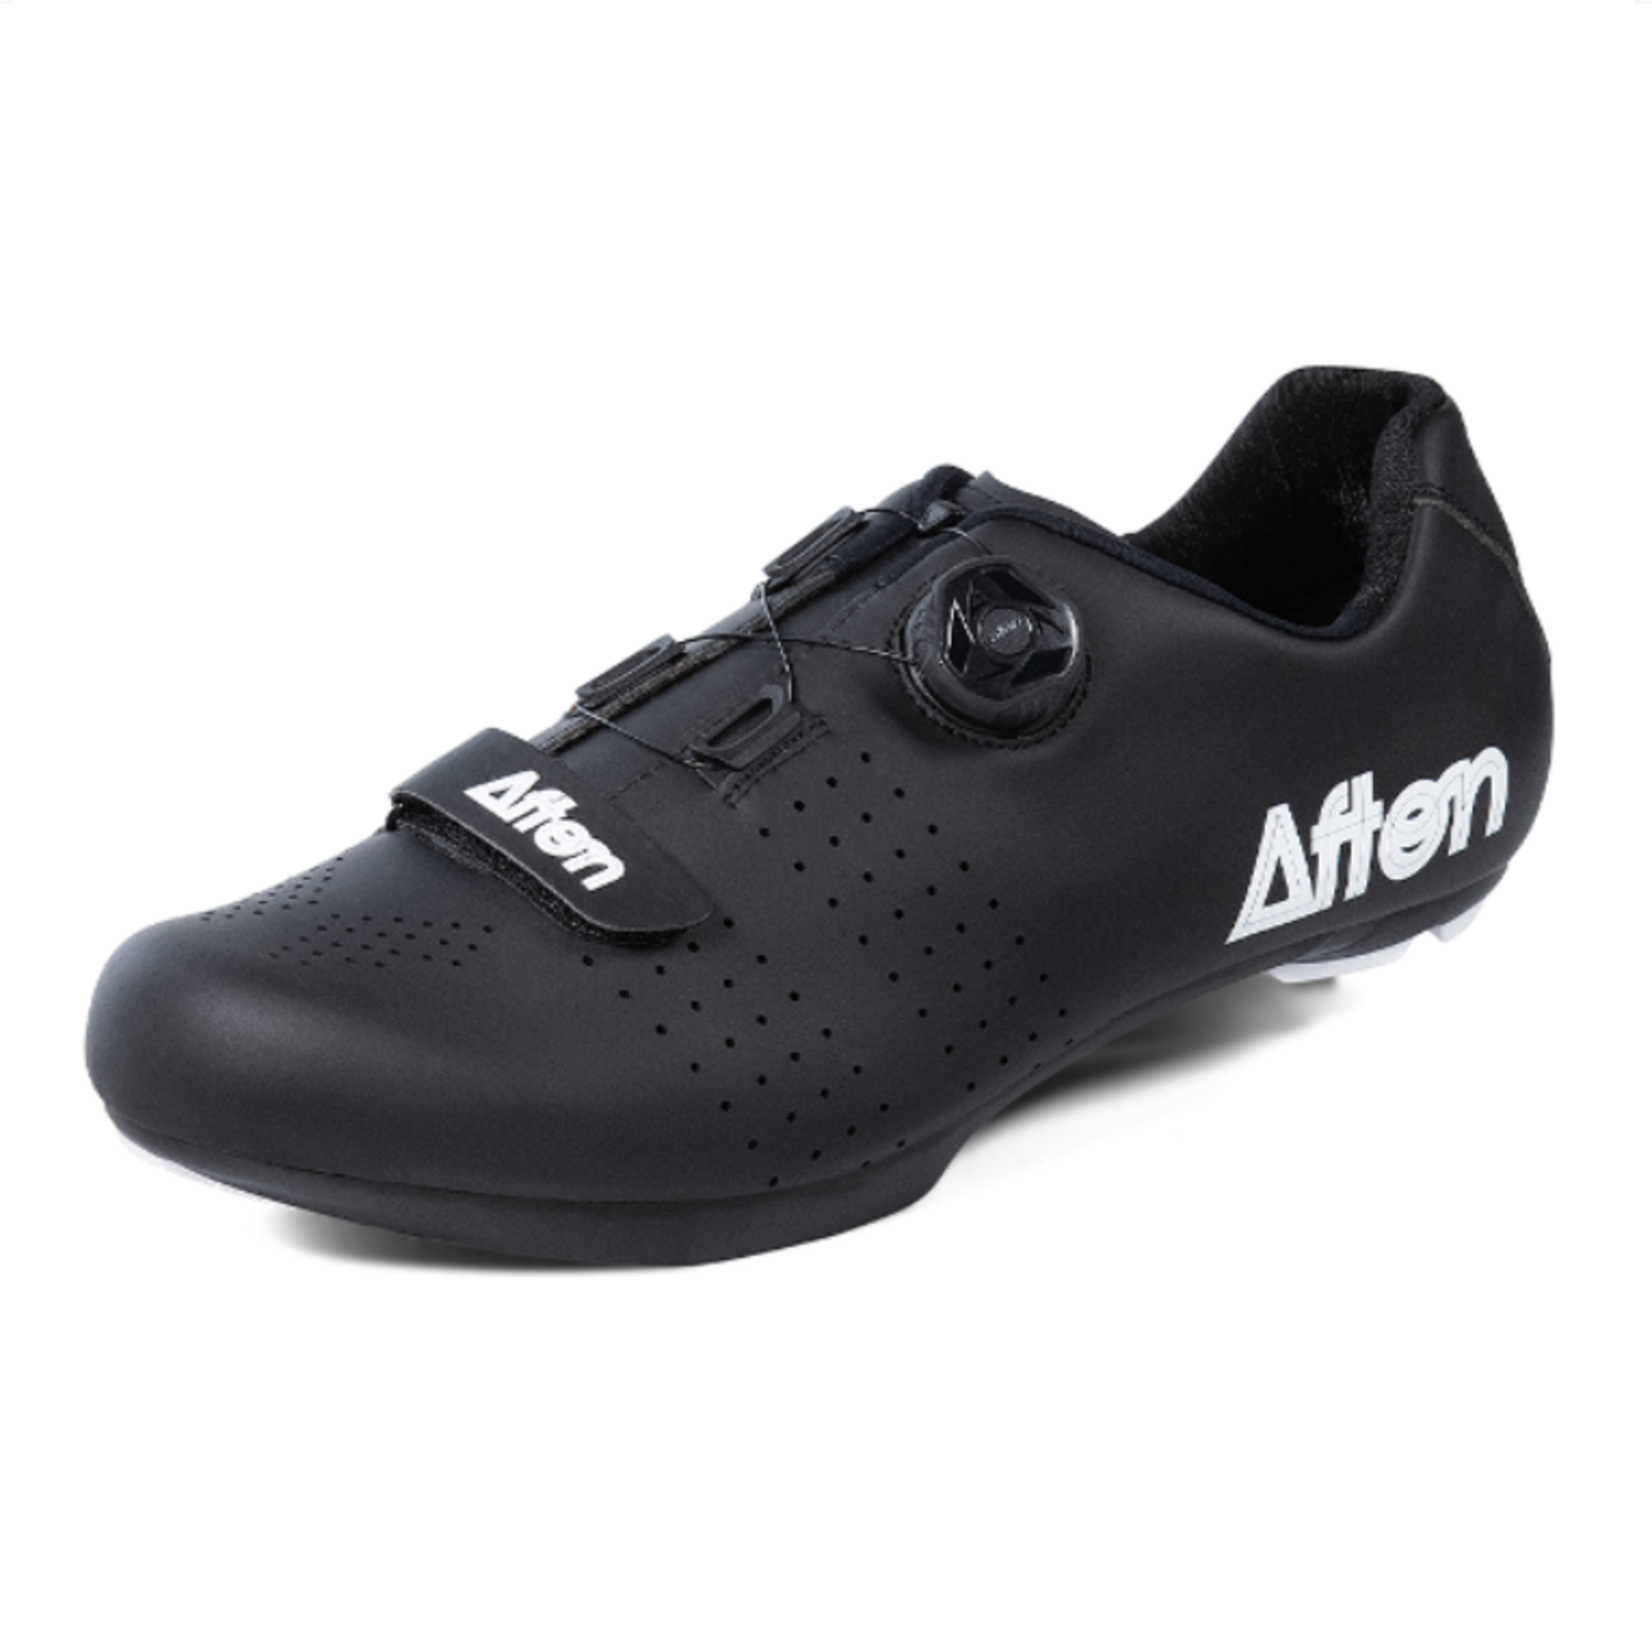 AFTON Gravel Shoes - ROYCE - Black/White, Size 45